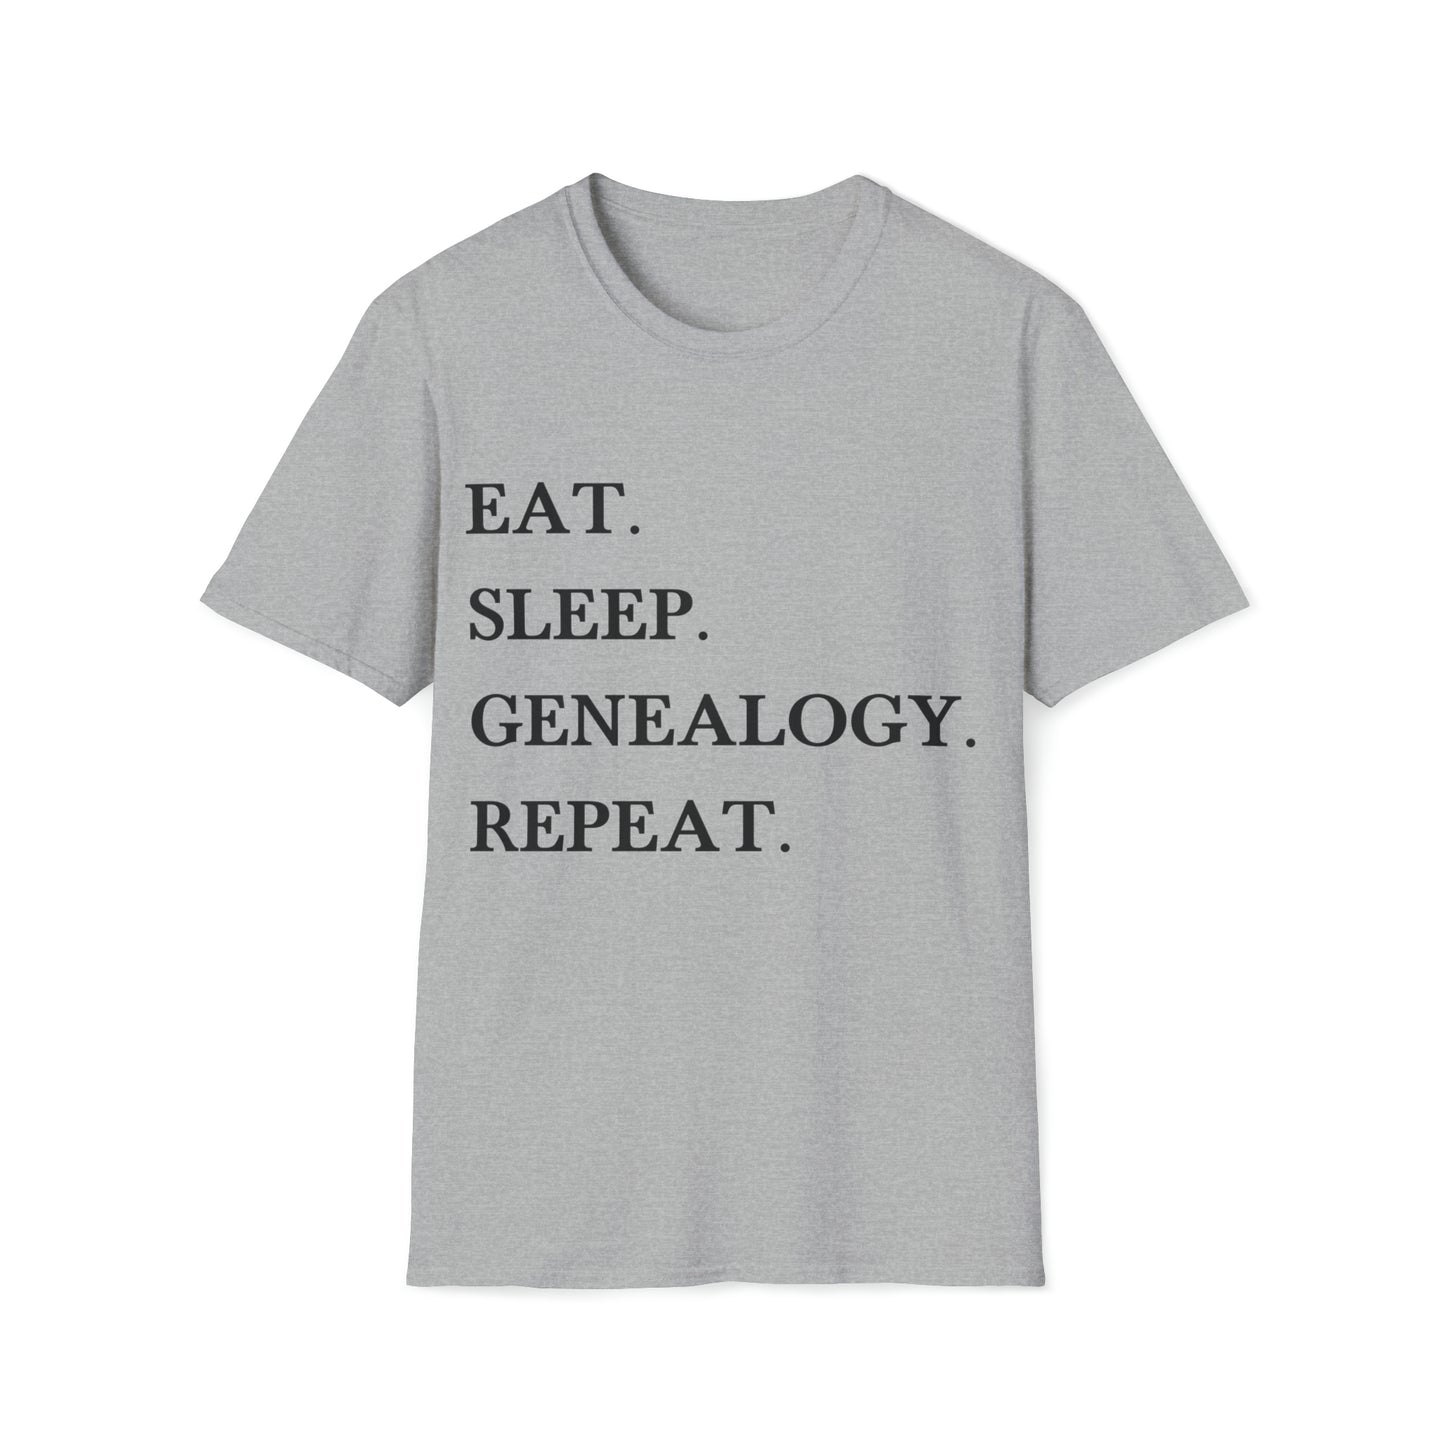 Eat. Sleep. Genealogy. Repeat. T-Shirt